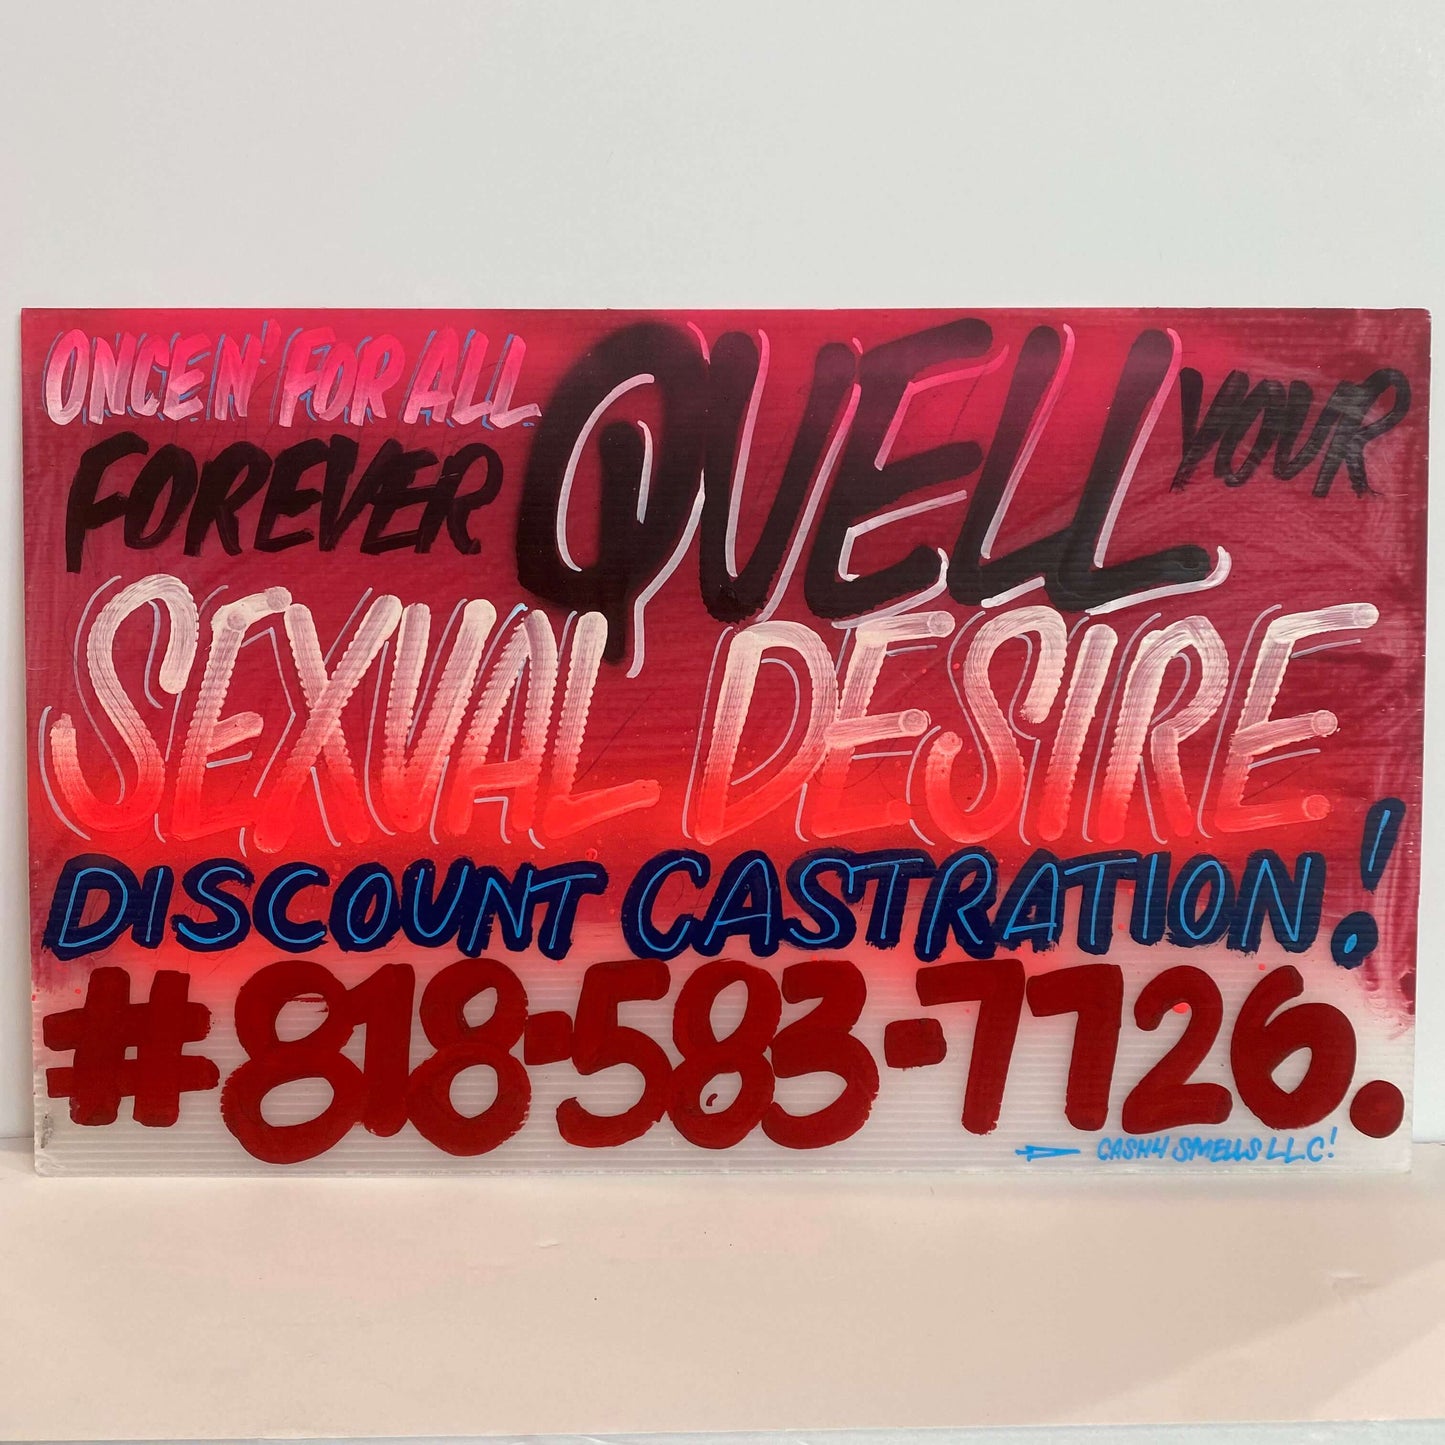 CASH4 'Quell Sexual Desire'